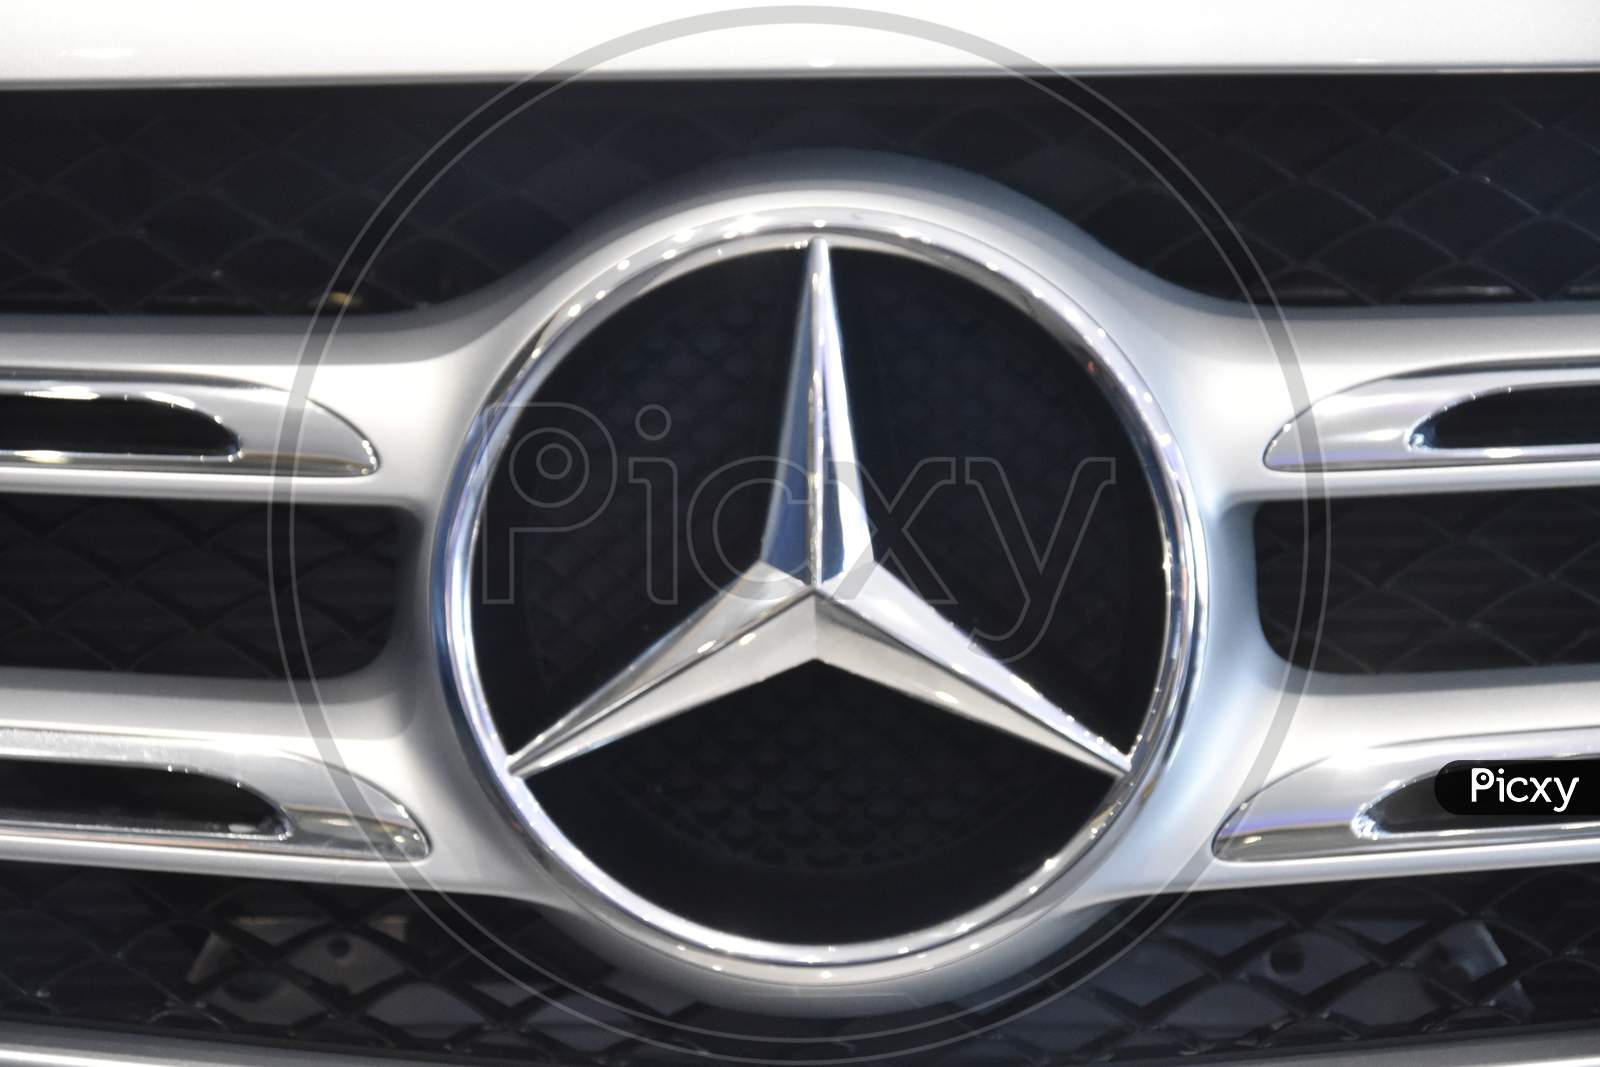 Benz  Symbol On a Car